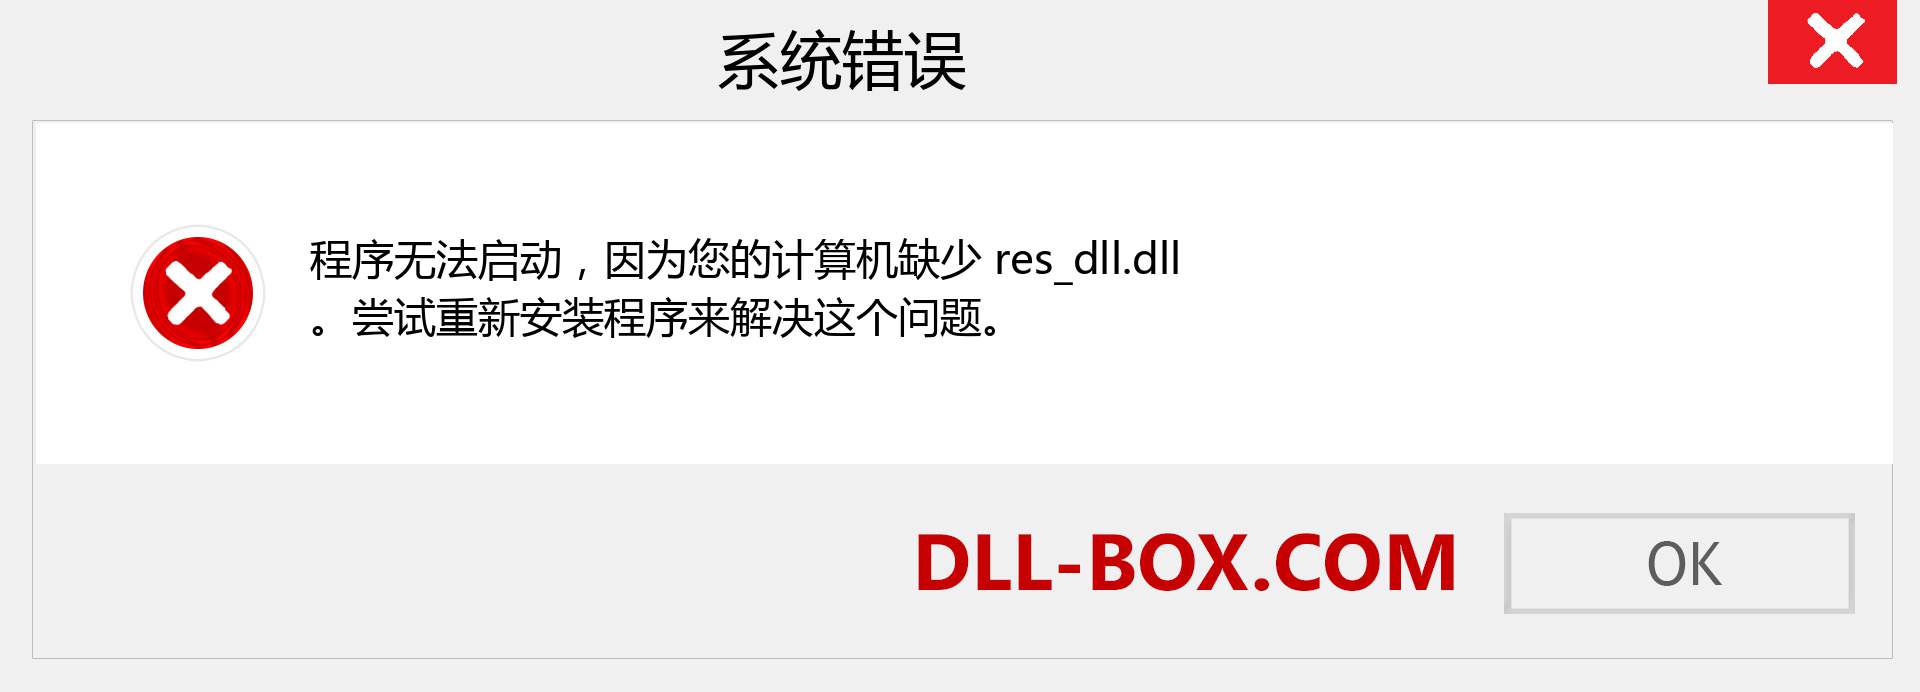 res_dll.dll 文件丢失？。 适用于 Windows 7、8、10 的下载 - 修复 Windows、照片、图像上的 res_dll dll 丢失错误